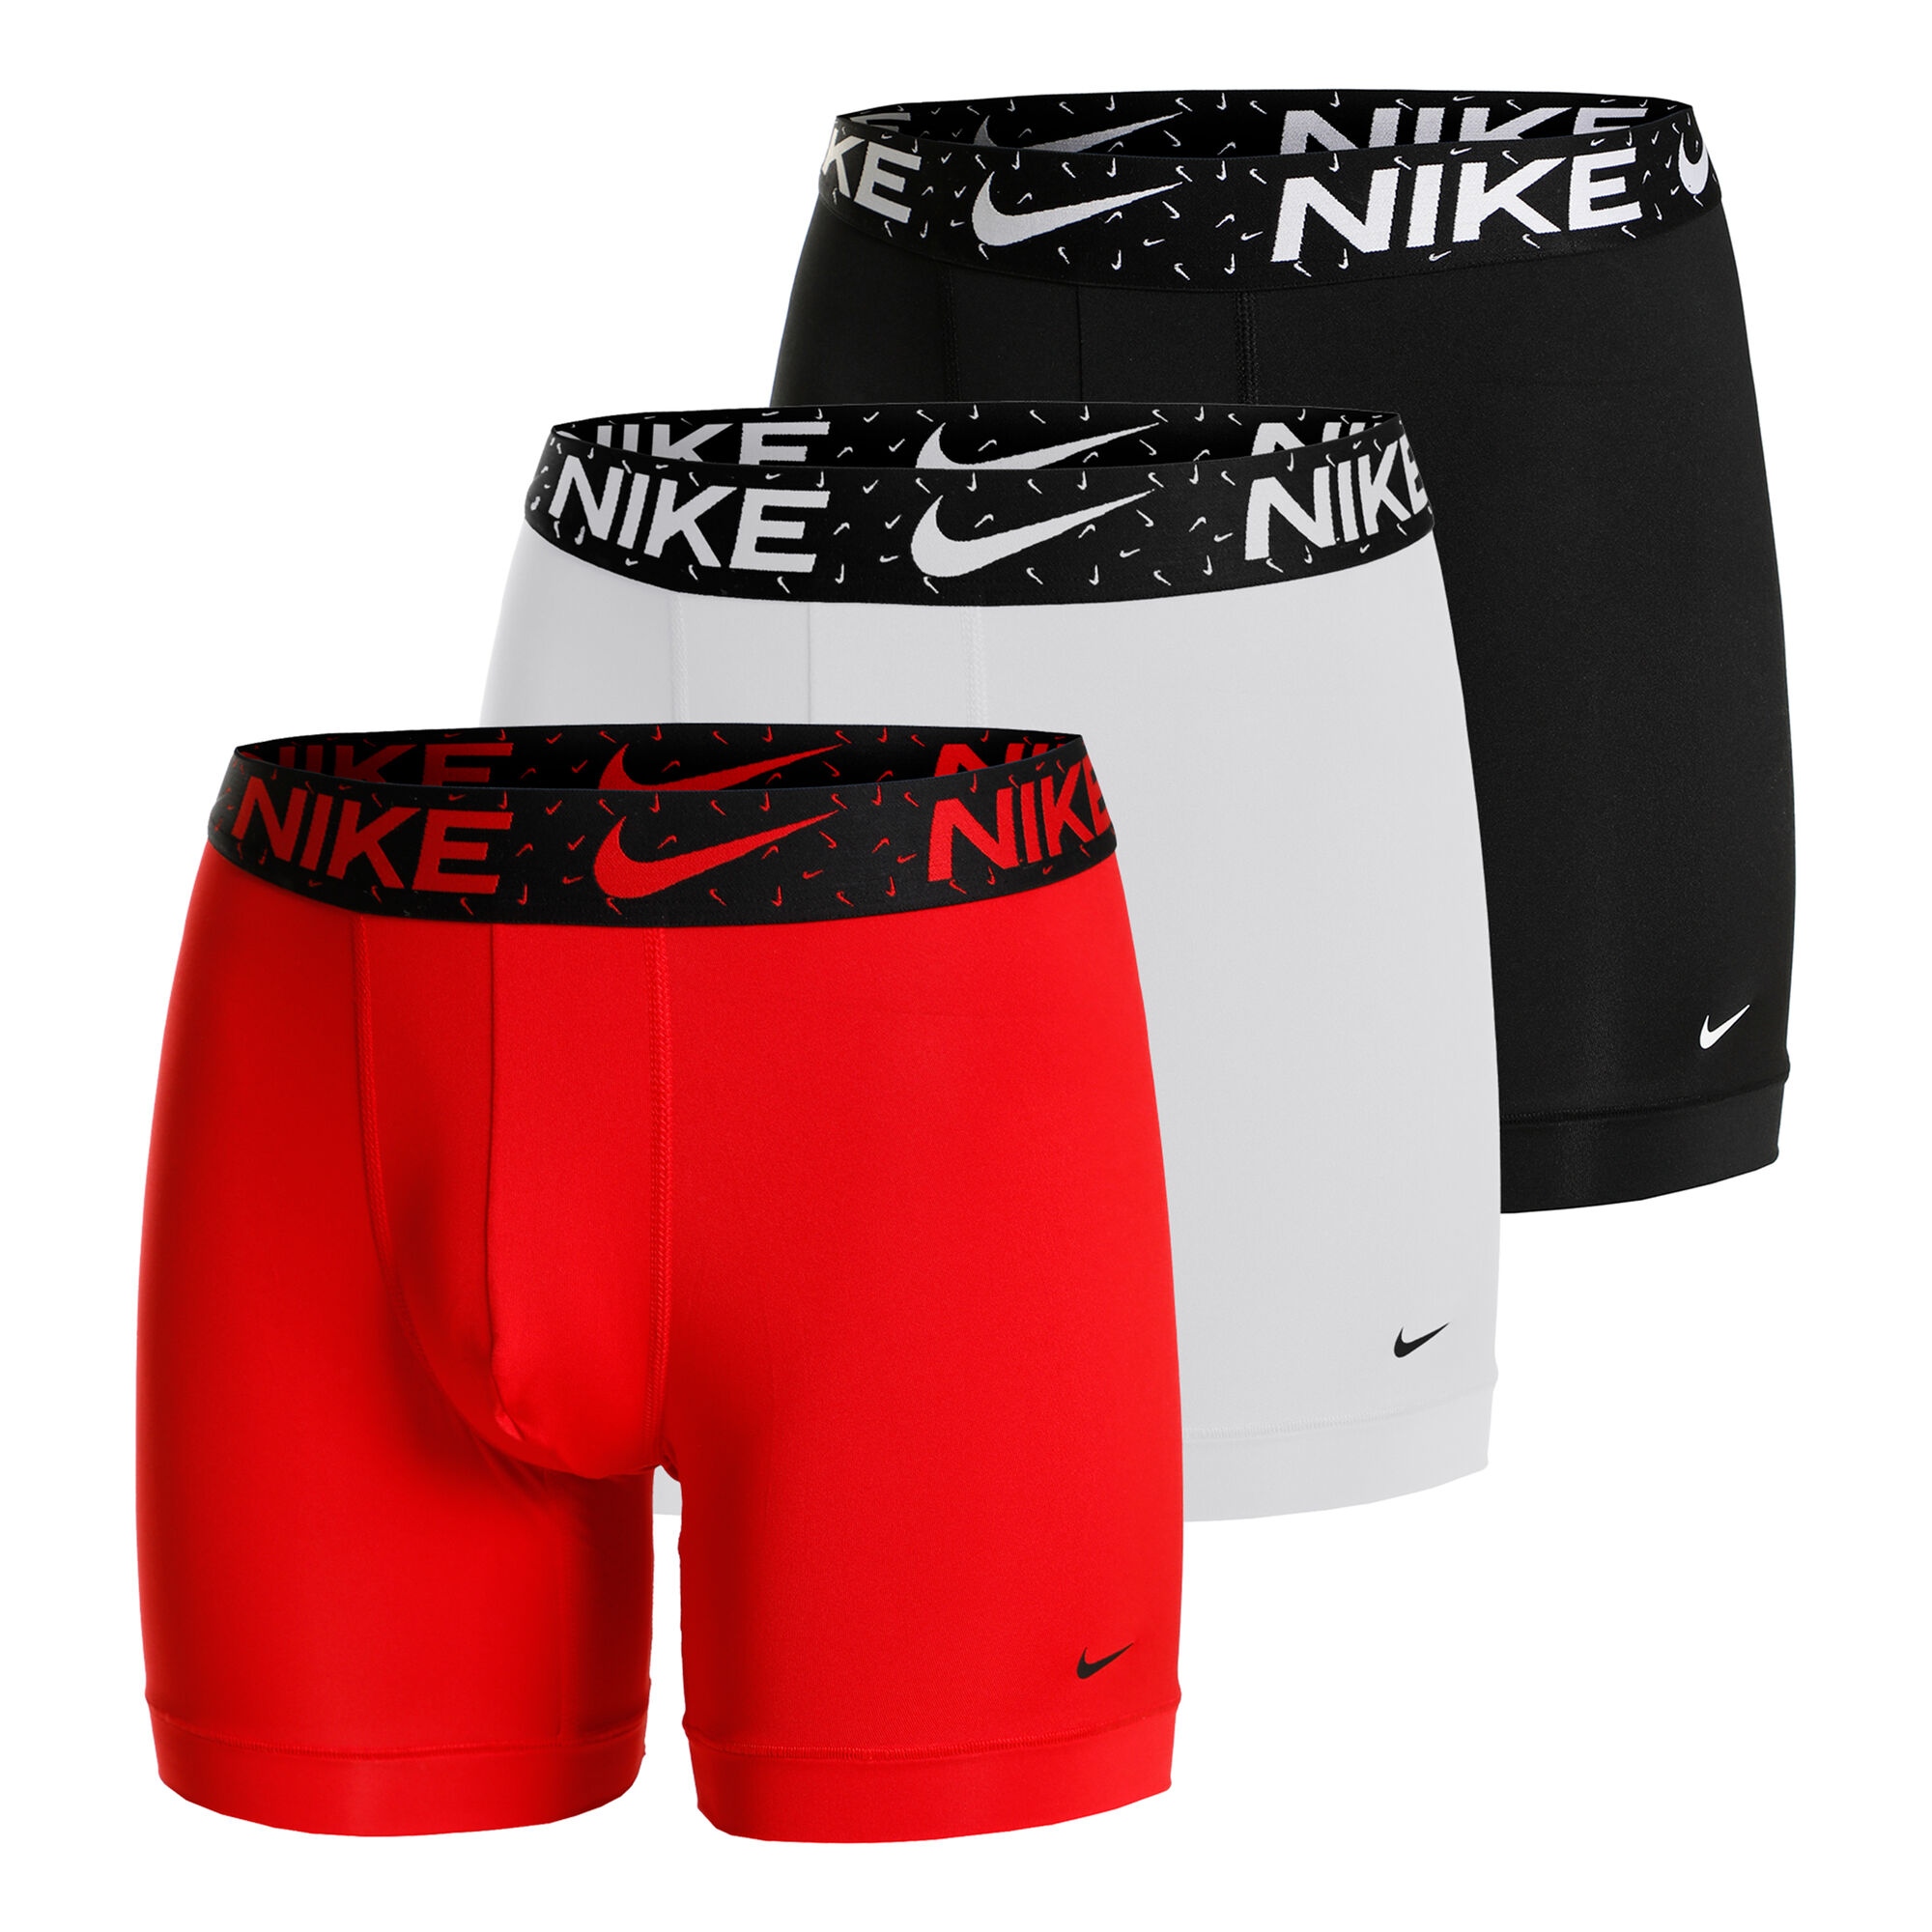 Nike Dri-Fit Essen Micro Briefs Boxer Shorts Pack Men - Multicoloured online | Tennis-Point